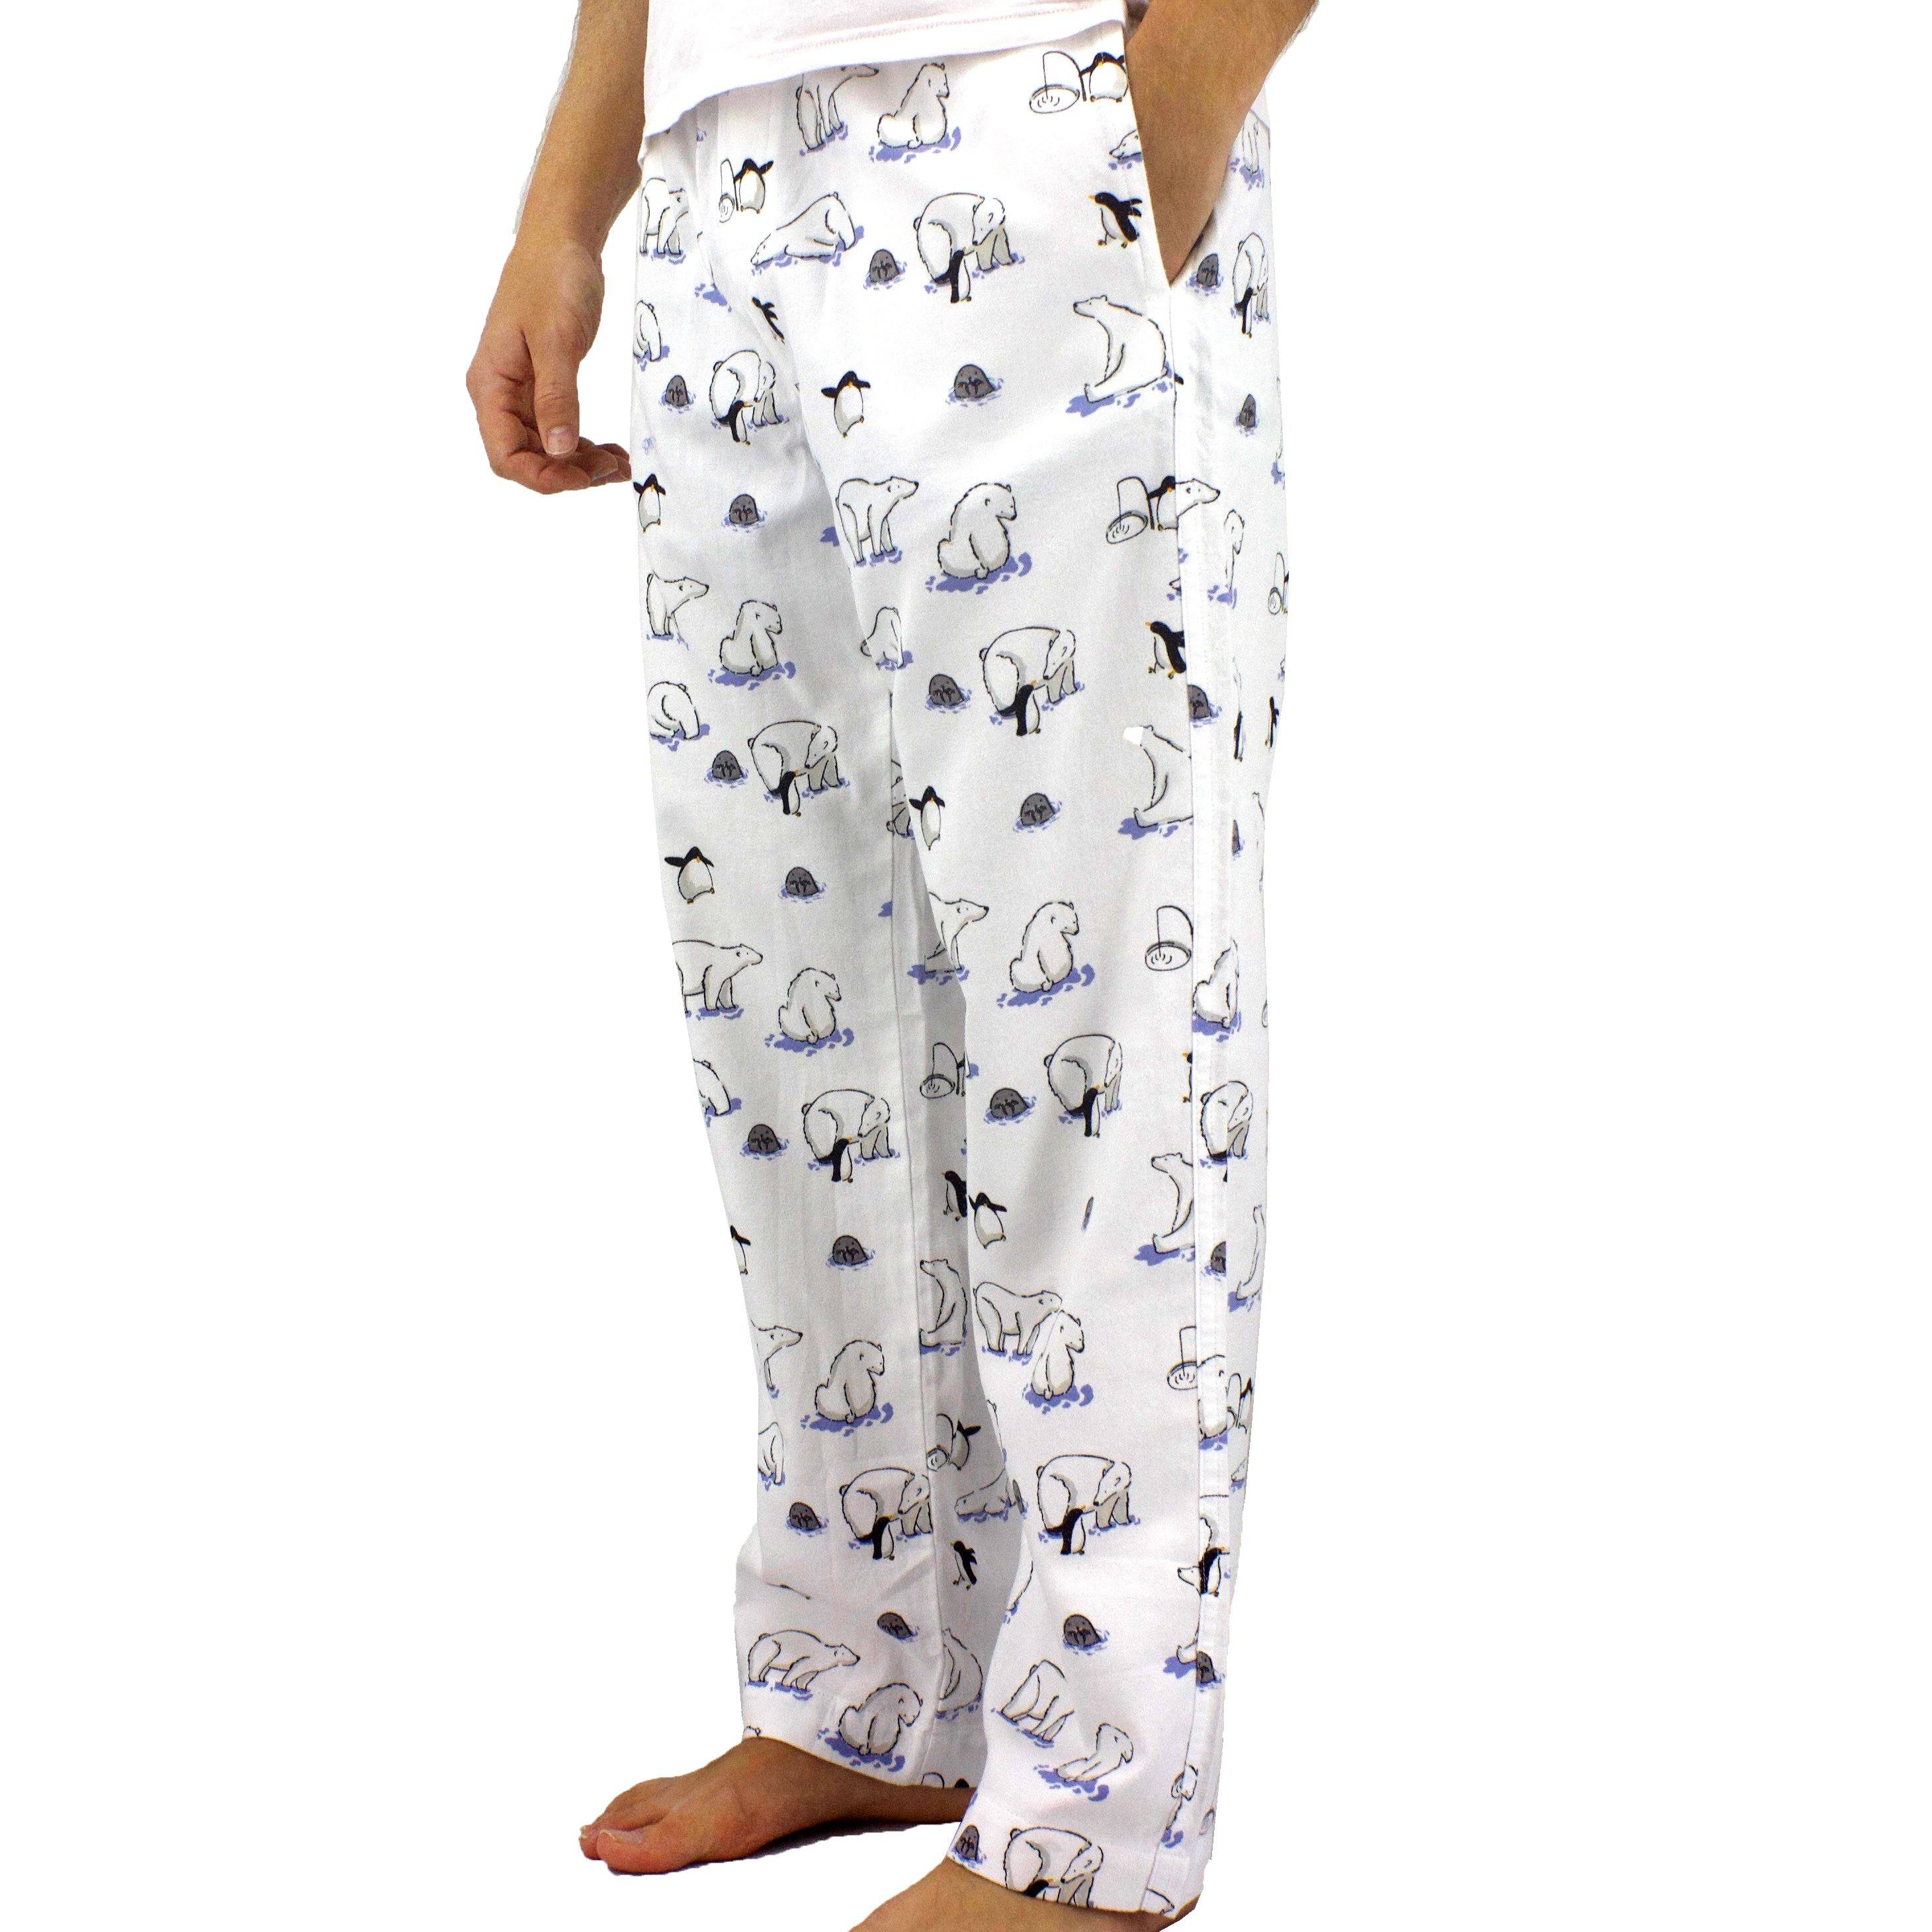 Comfy Warm Soft Flannel Pajama Pyjama Pjs Pants for Men with Polar Bears All Over Print